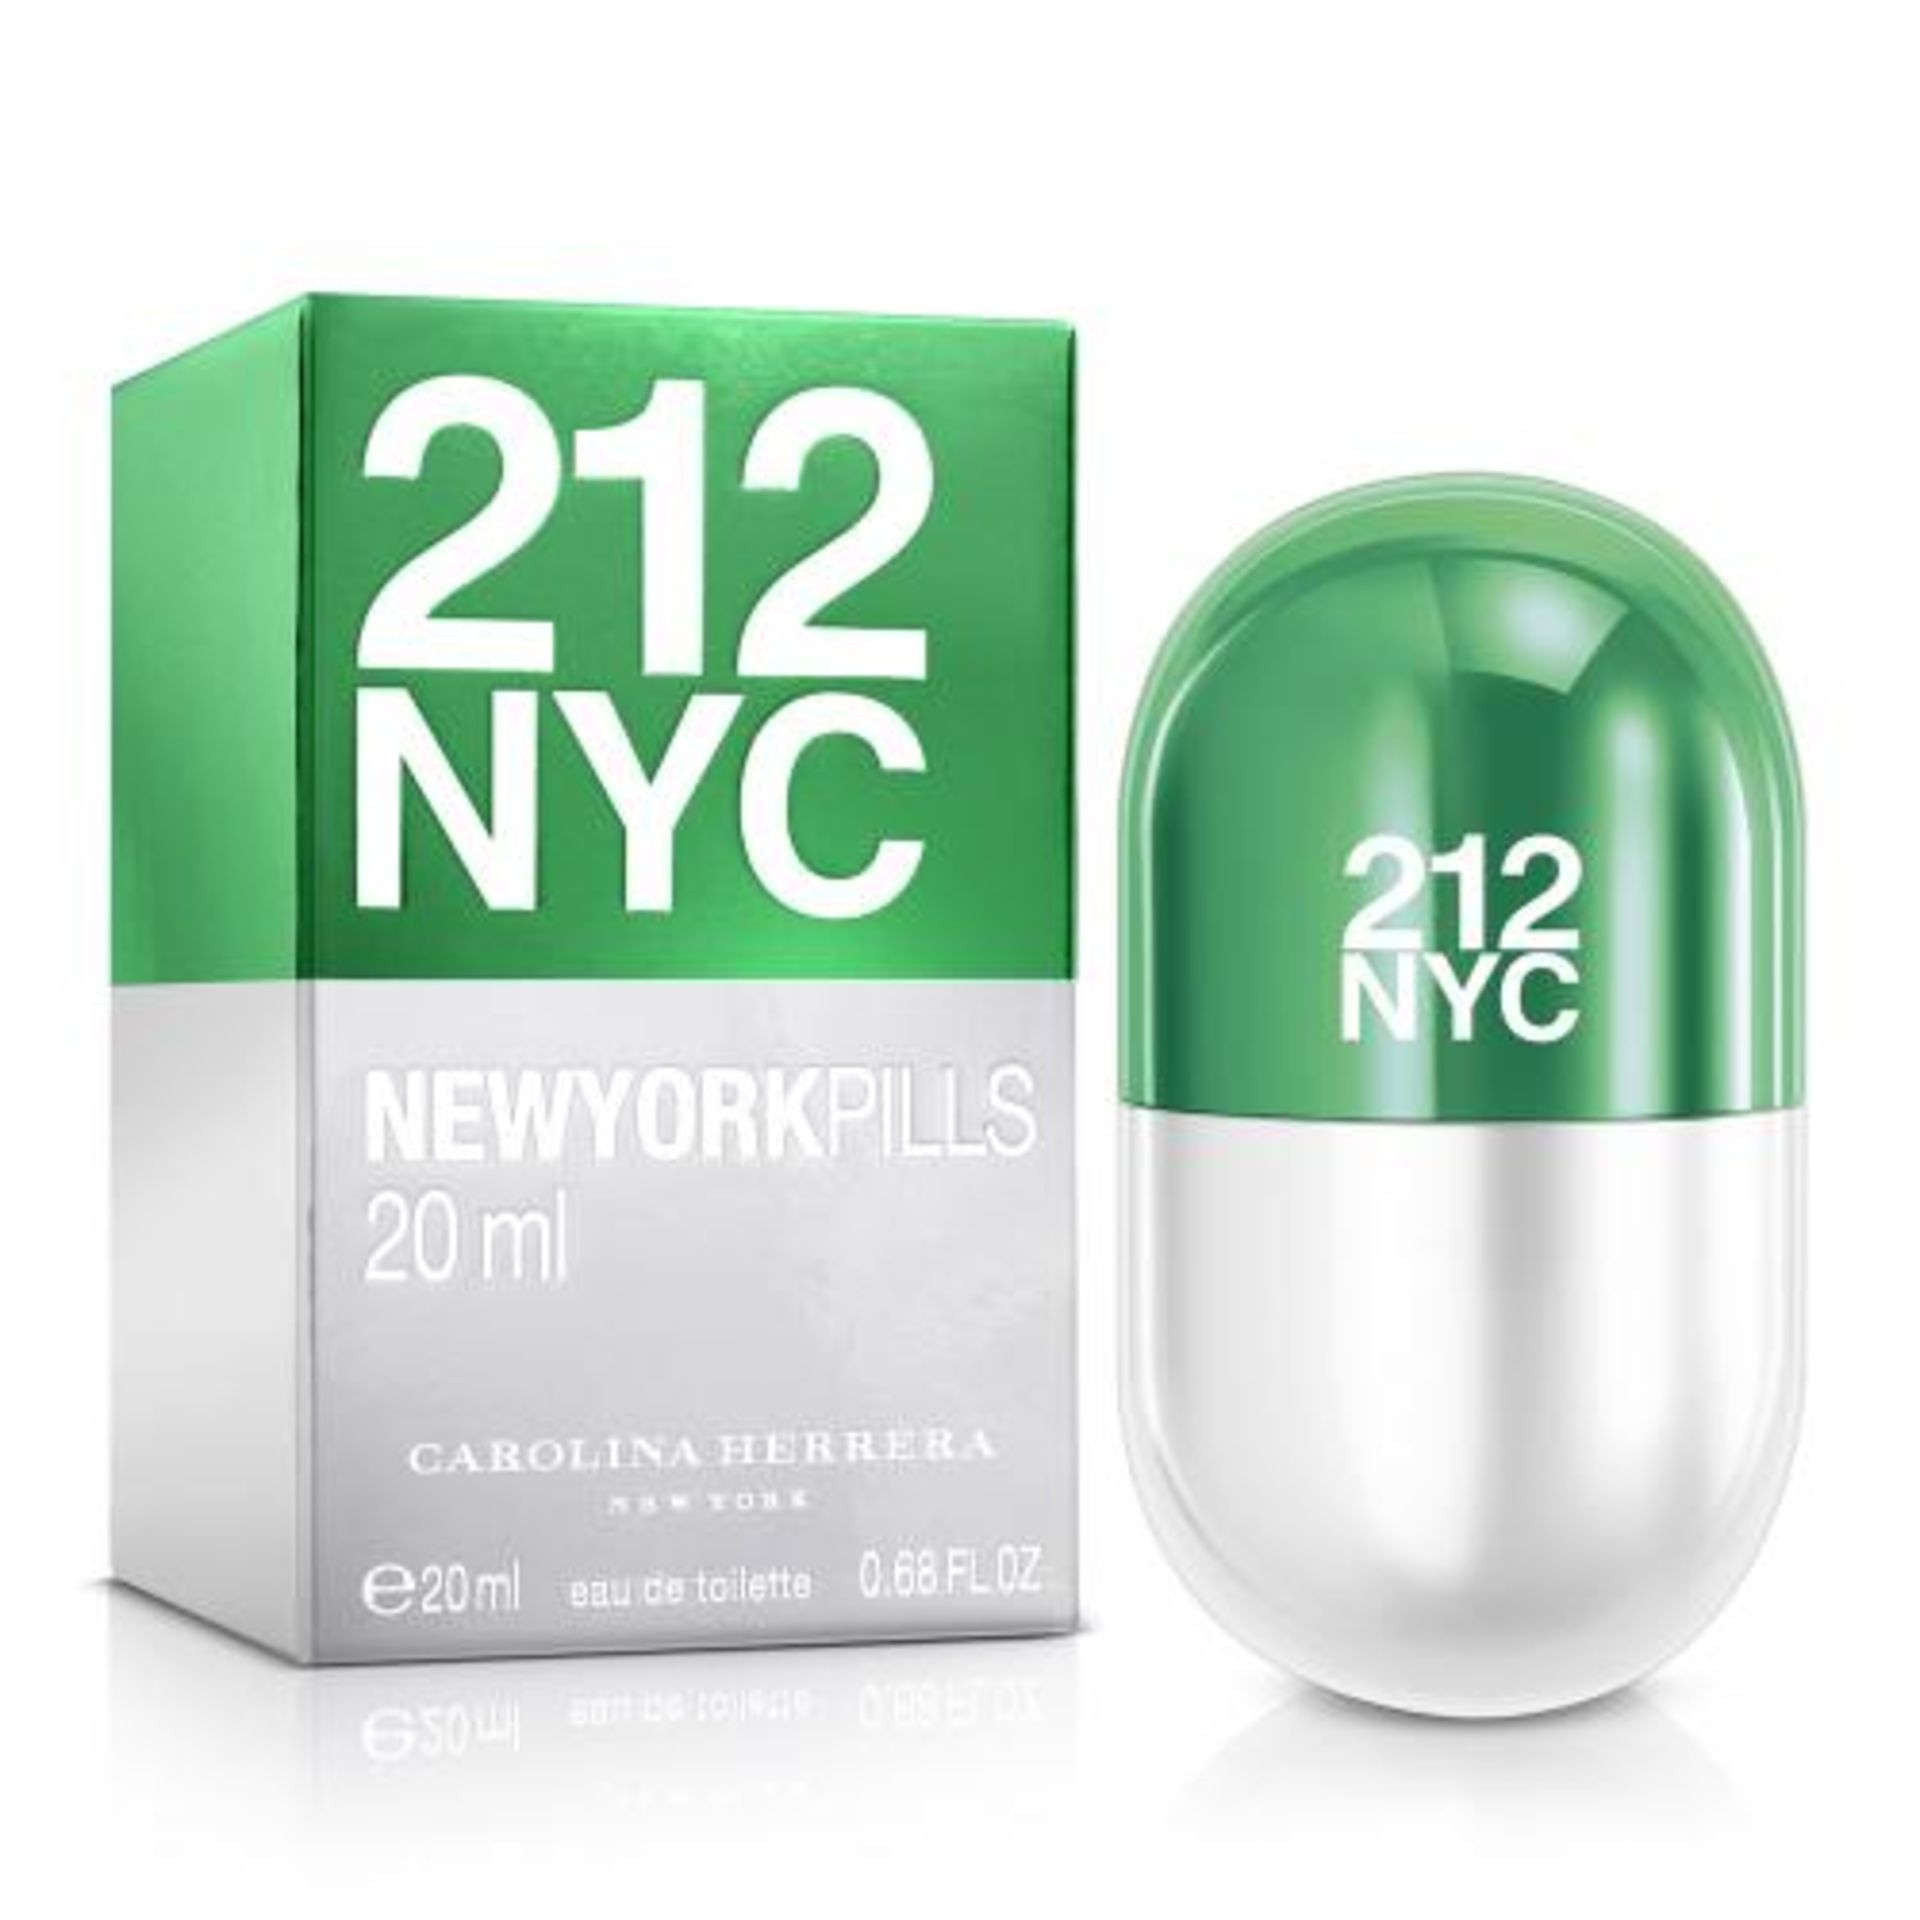 V Brand New Carolina Herrera 212 NYC New York Pills Spray For Women 20ml EDT ISP £27.25 (Red Label